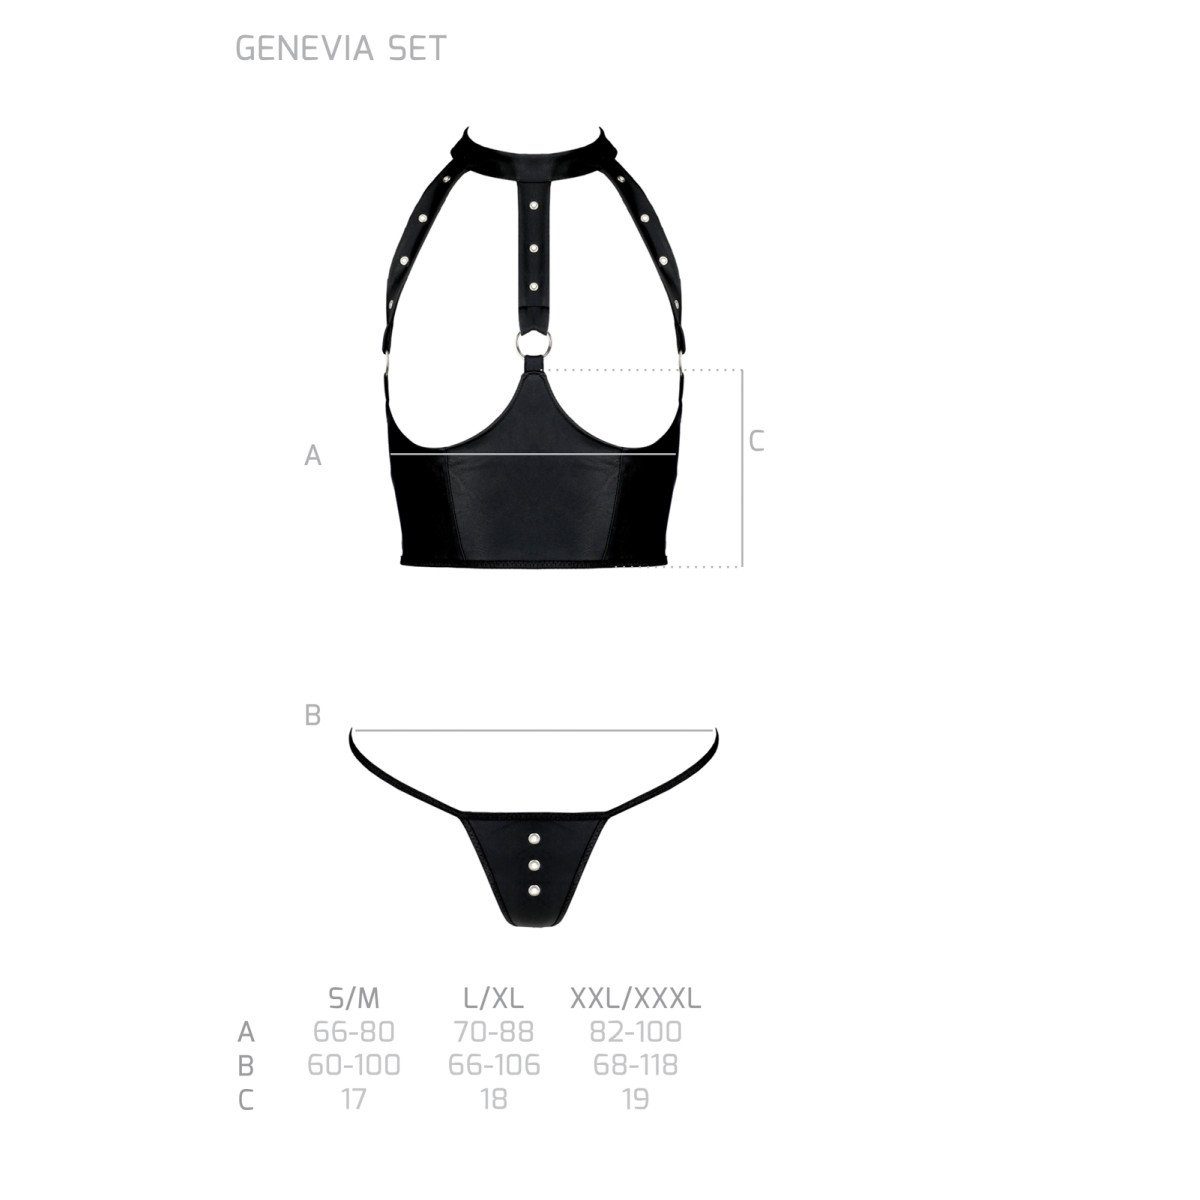 Schalen-BH (L/XL,S/M,XXL) 2pcs with - open Passion-Exklusiv set PE Set: Genevia black bra